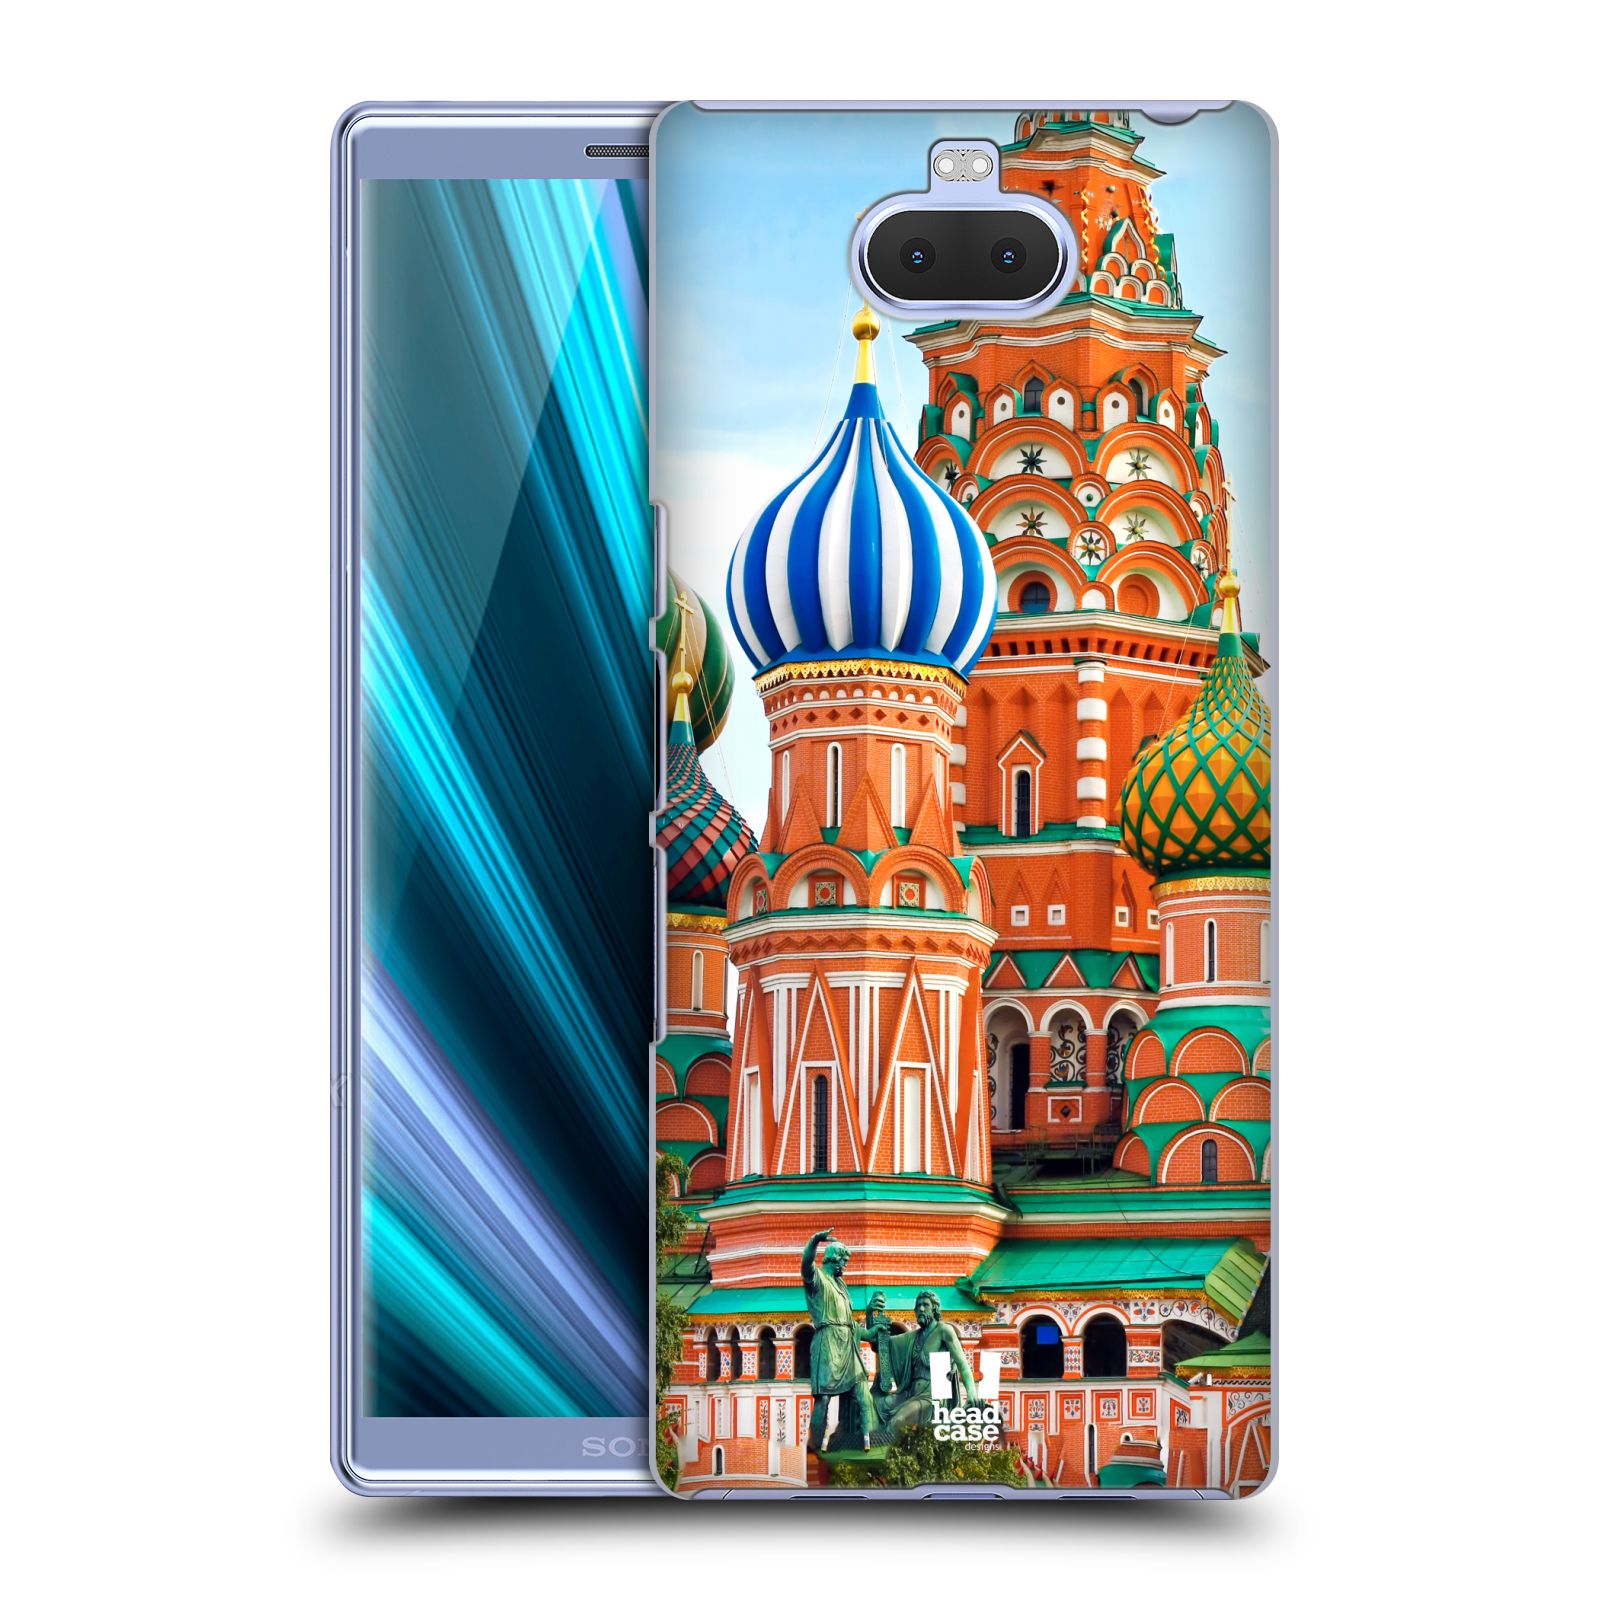 Pouzdro na mobil Sony Xperia 10 - Head Case - vzor Města foto náměstí RUSKO,MOSKVA, RUDÉ NÁMĚSTÍ